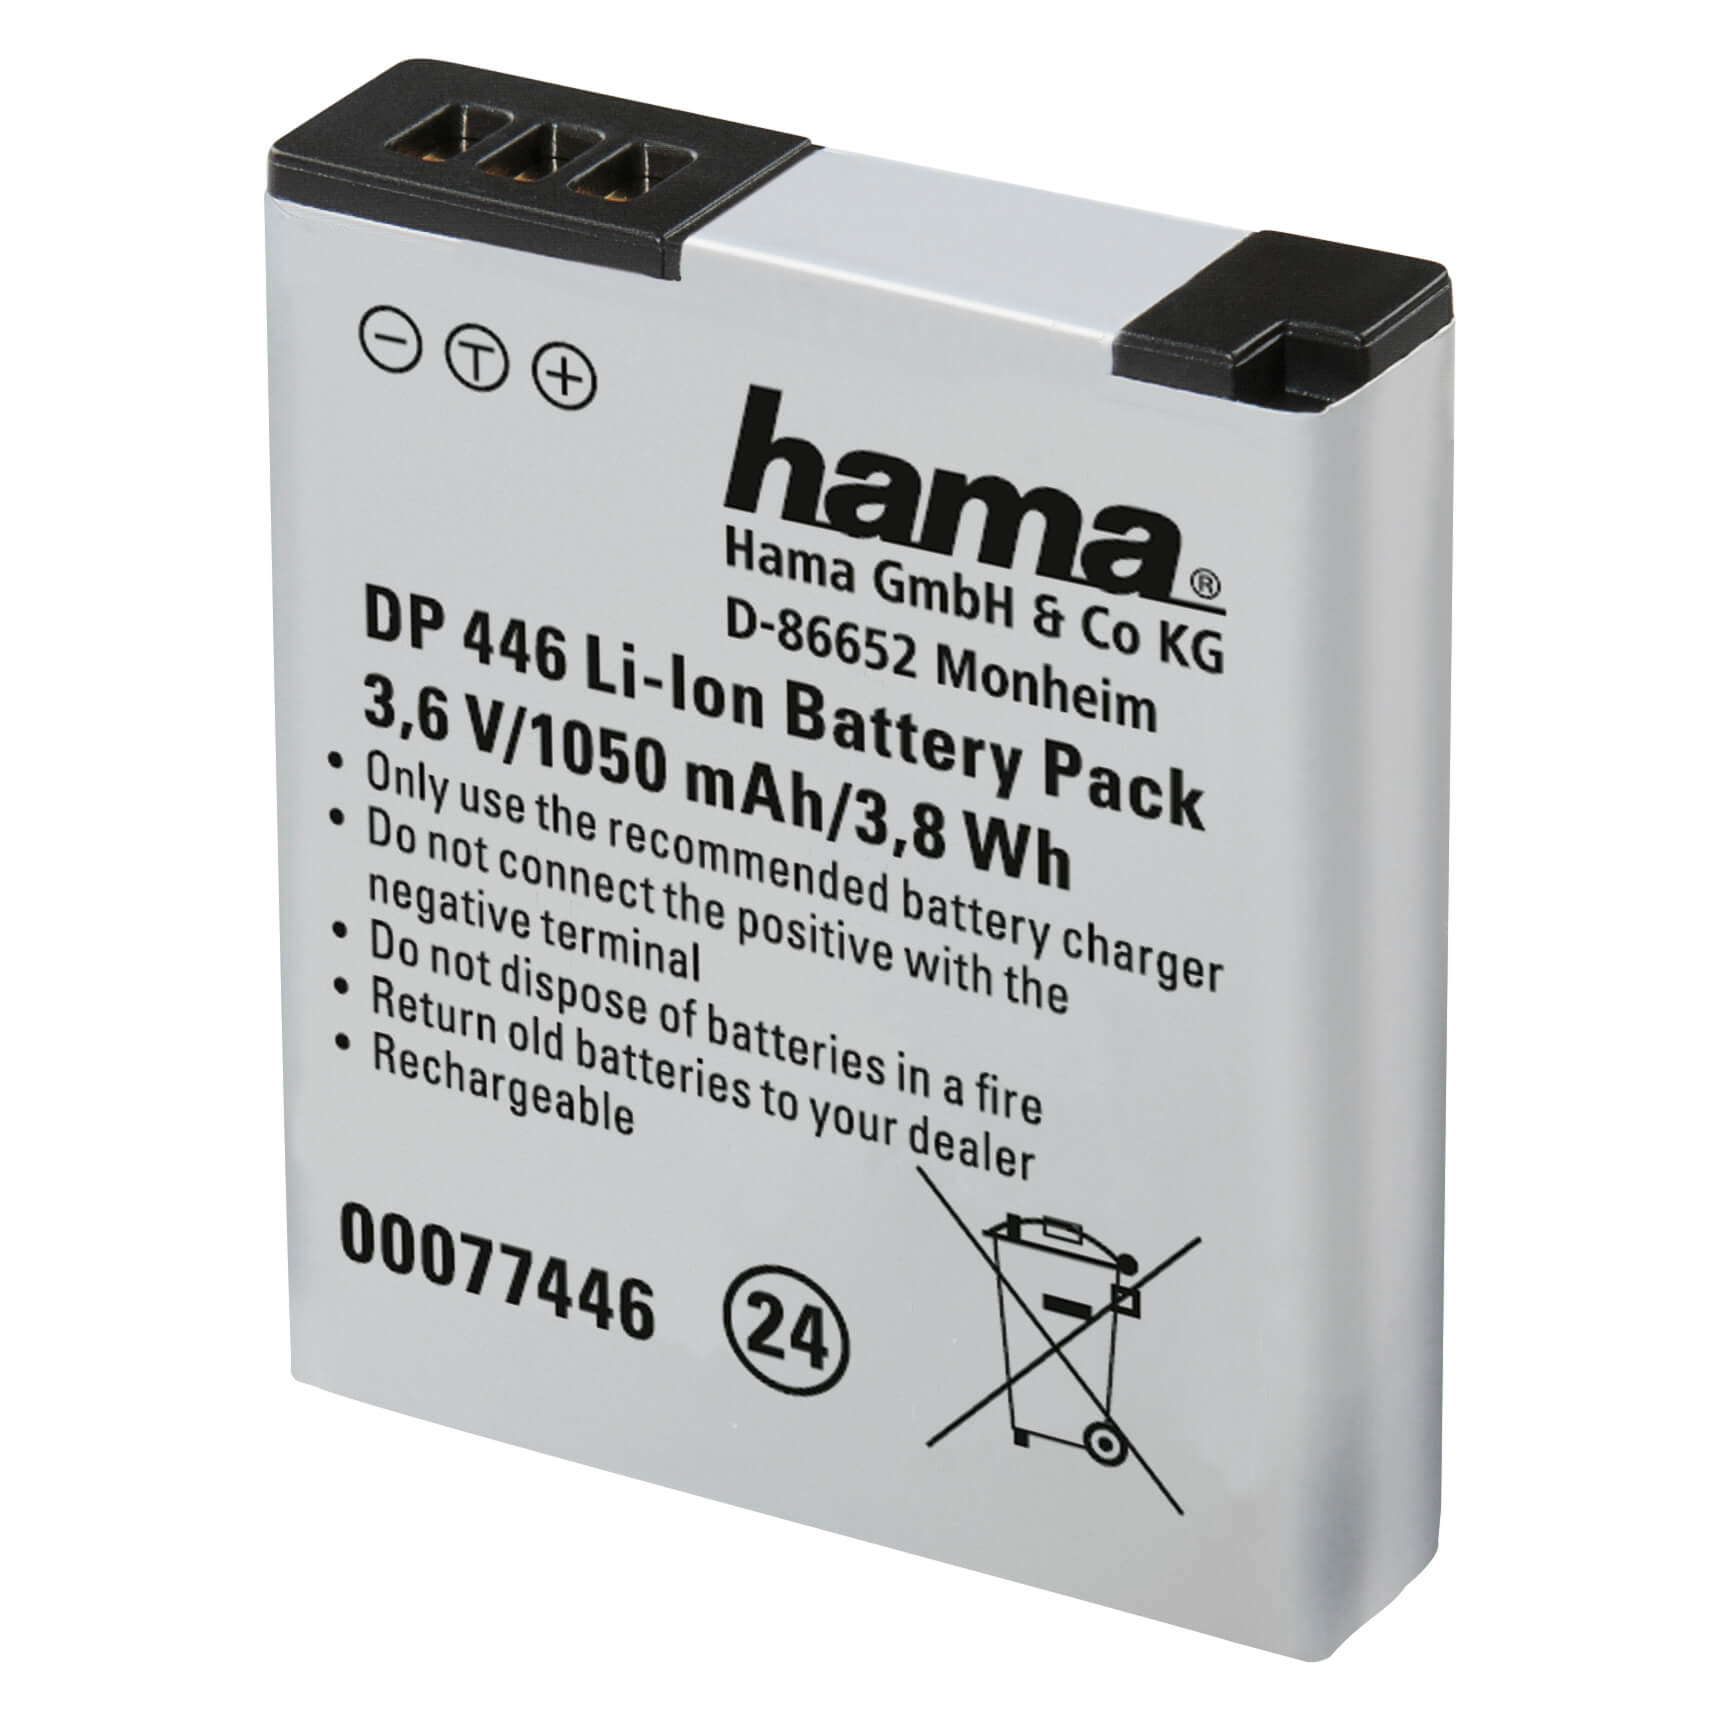 HAMA DP 446 Li-Ion Battery for Pan asonic DMW-BCM13